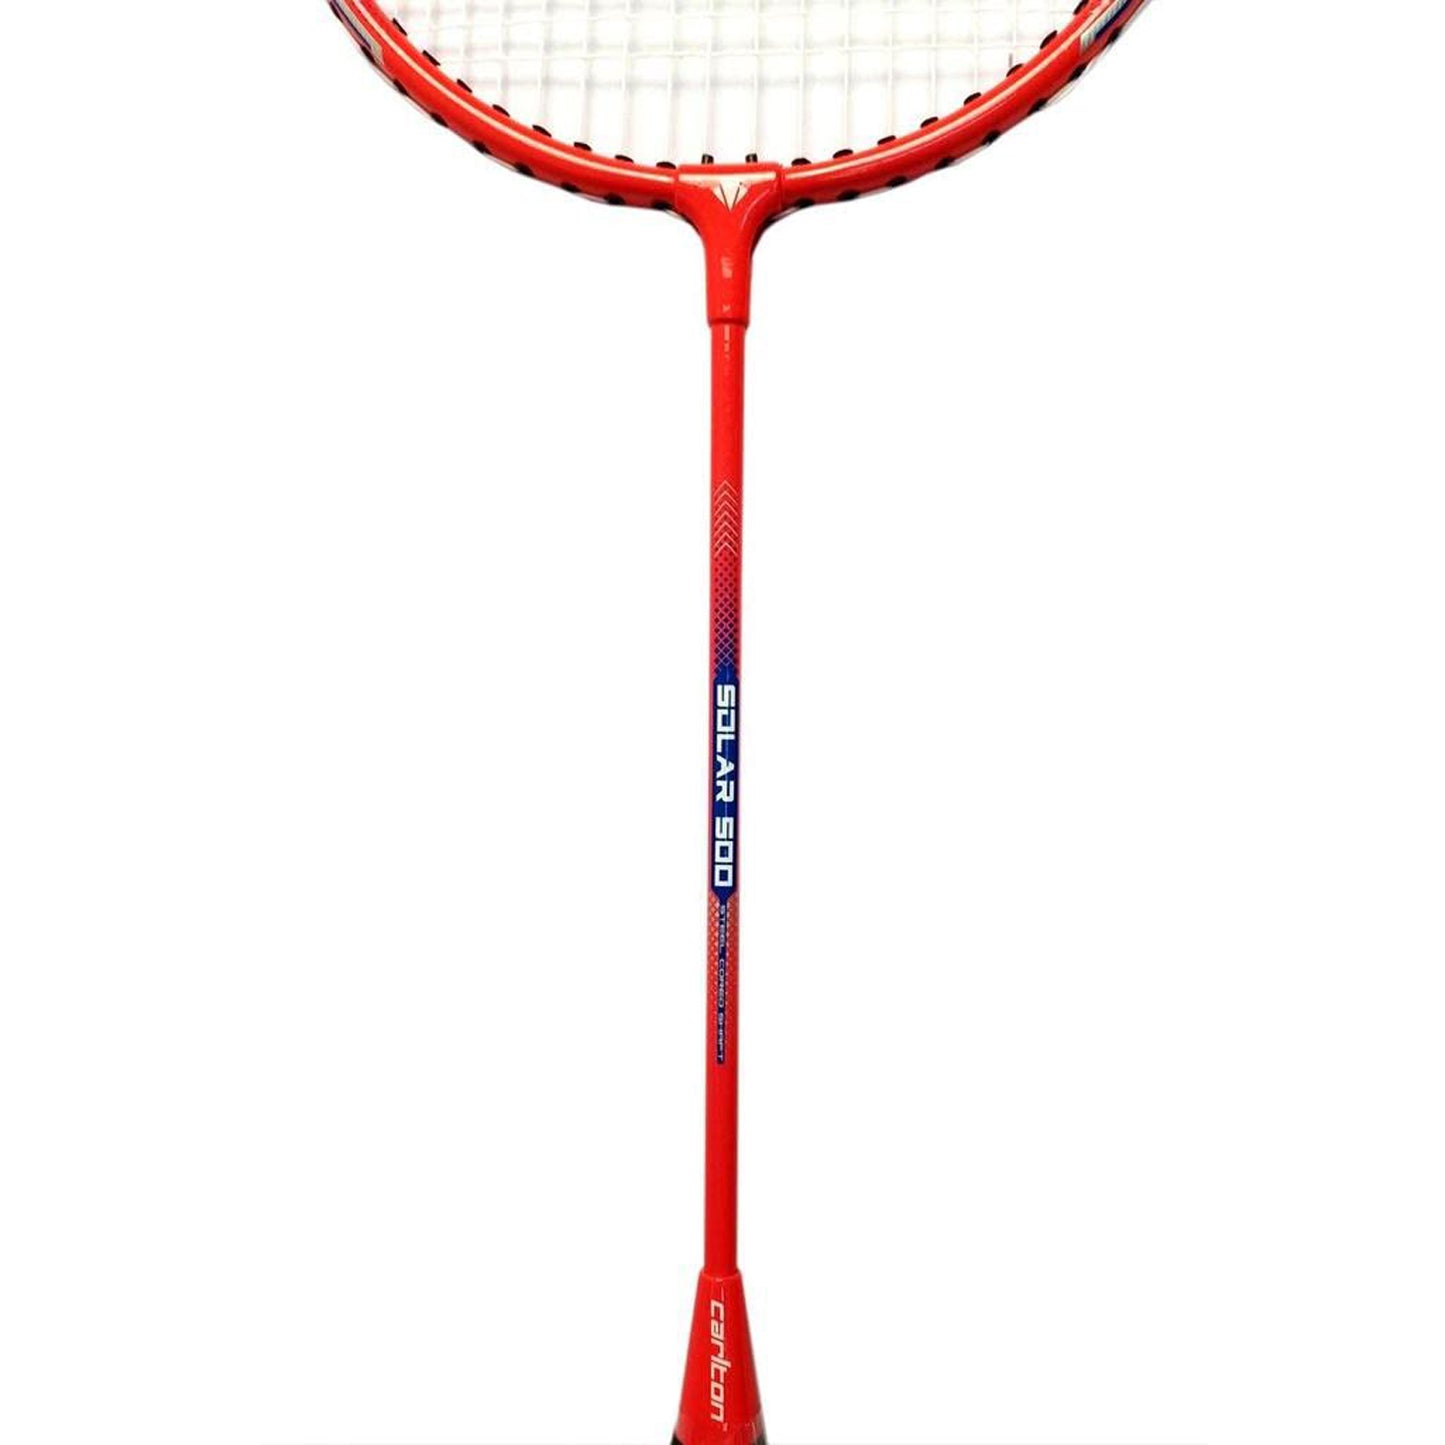 Carlton Solar 500 Strung Badminton Racquet, Red - Best Price online Prokicksports.com